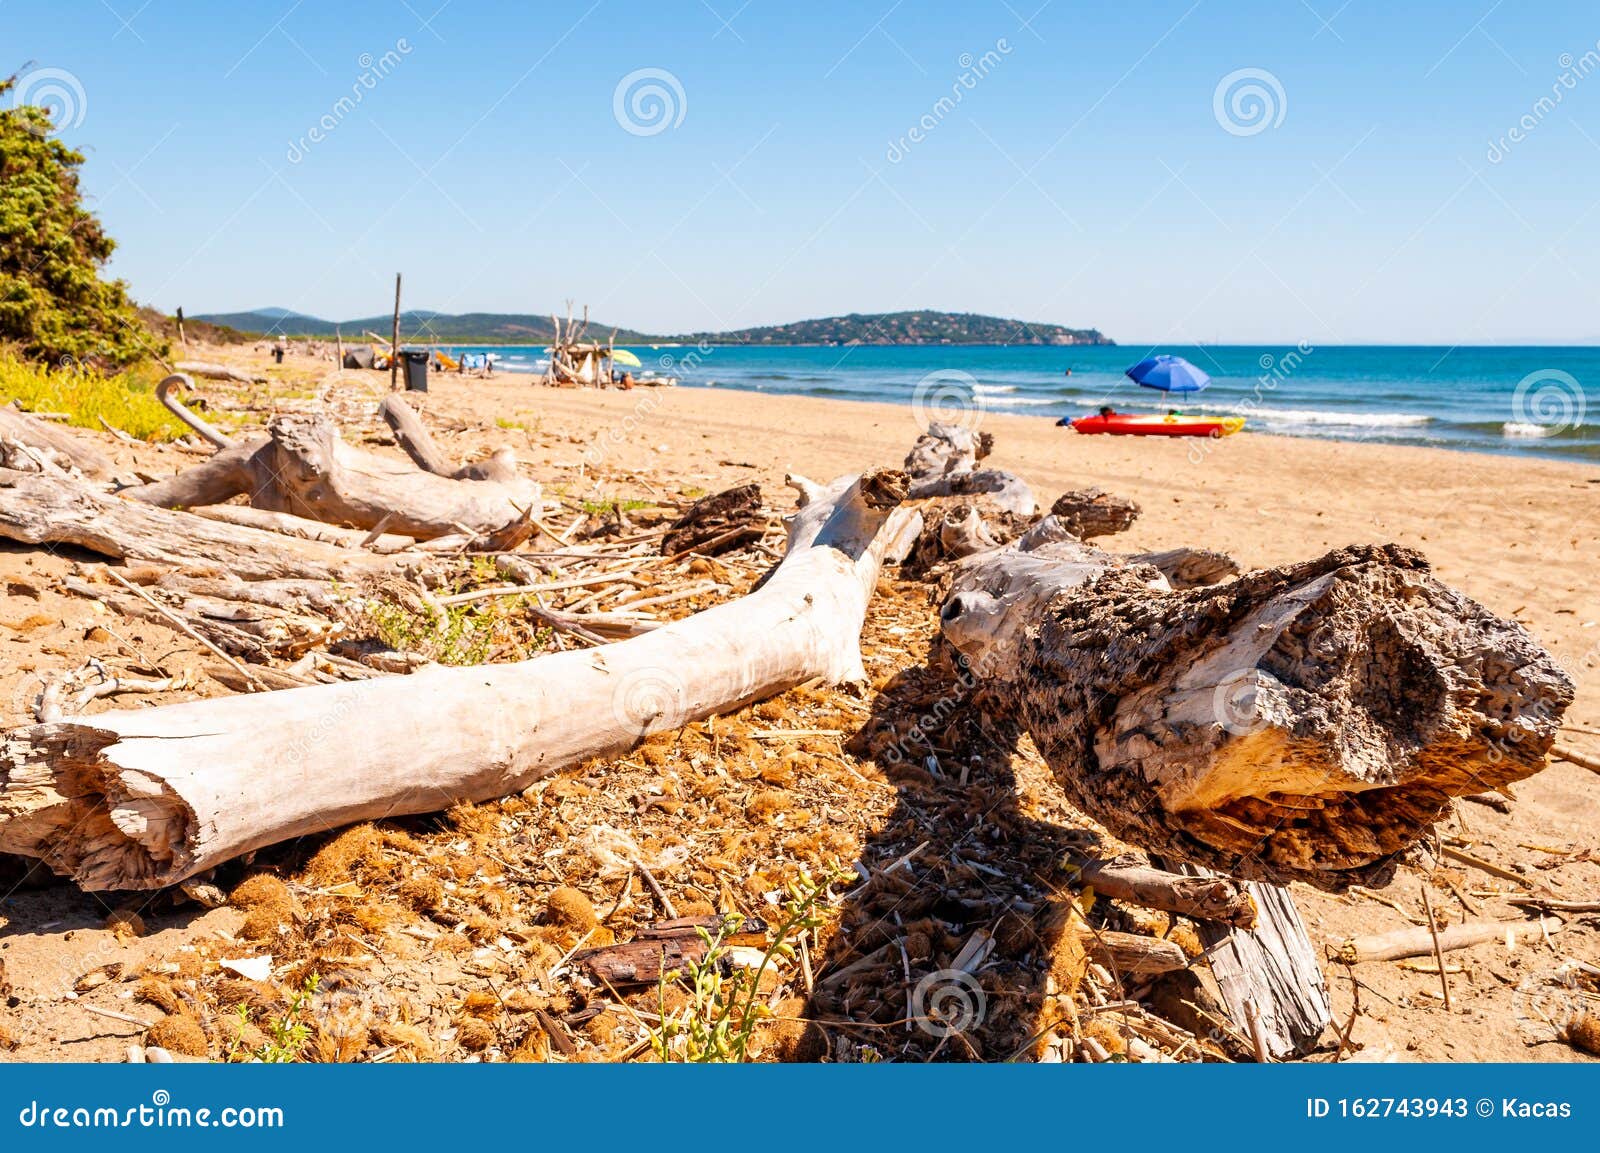 dried dead tree trunks lying on the sea beach sand in tenda gialla, province of grosseto, tuscany